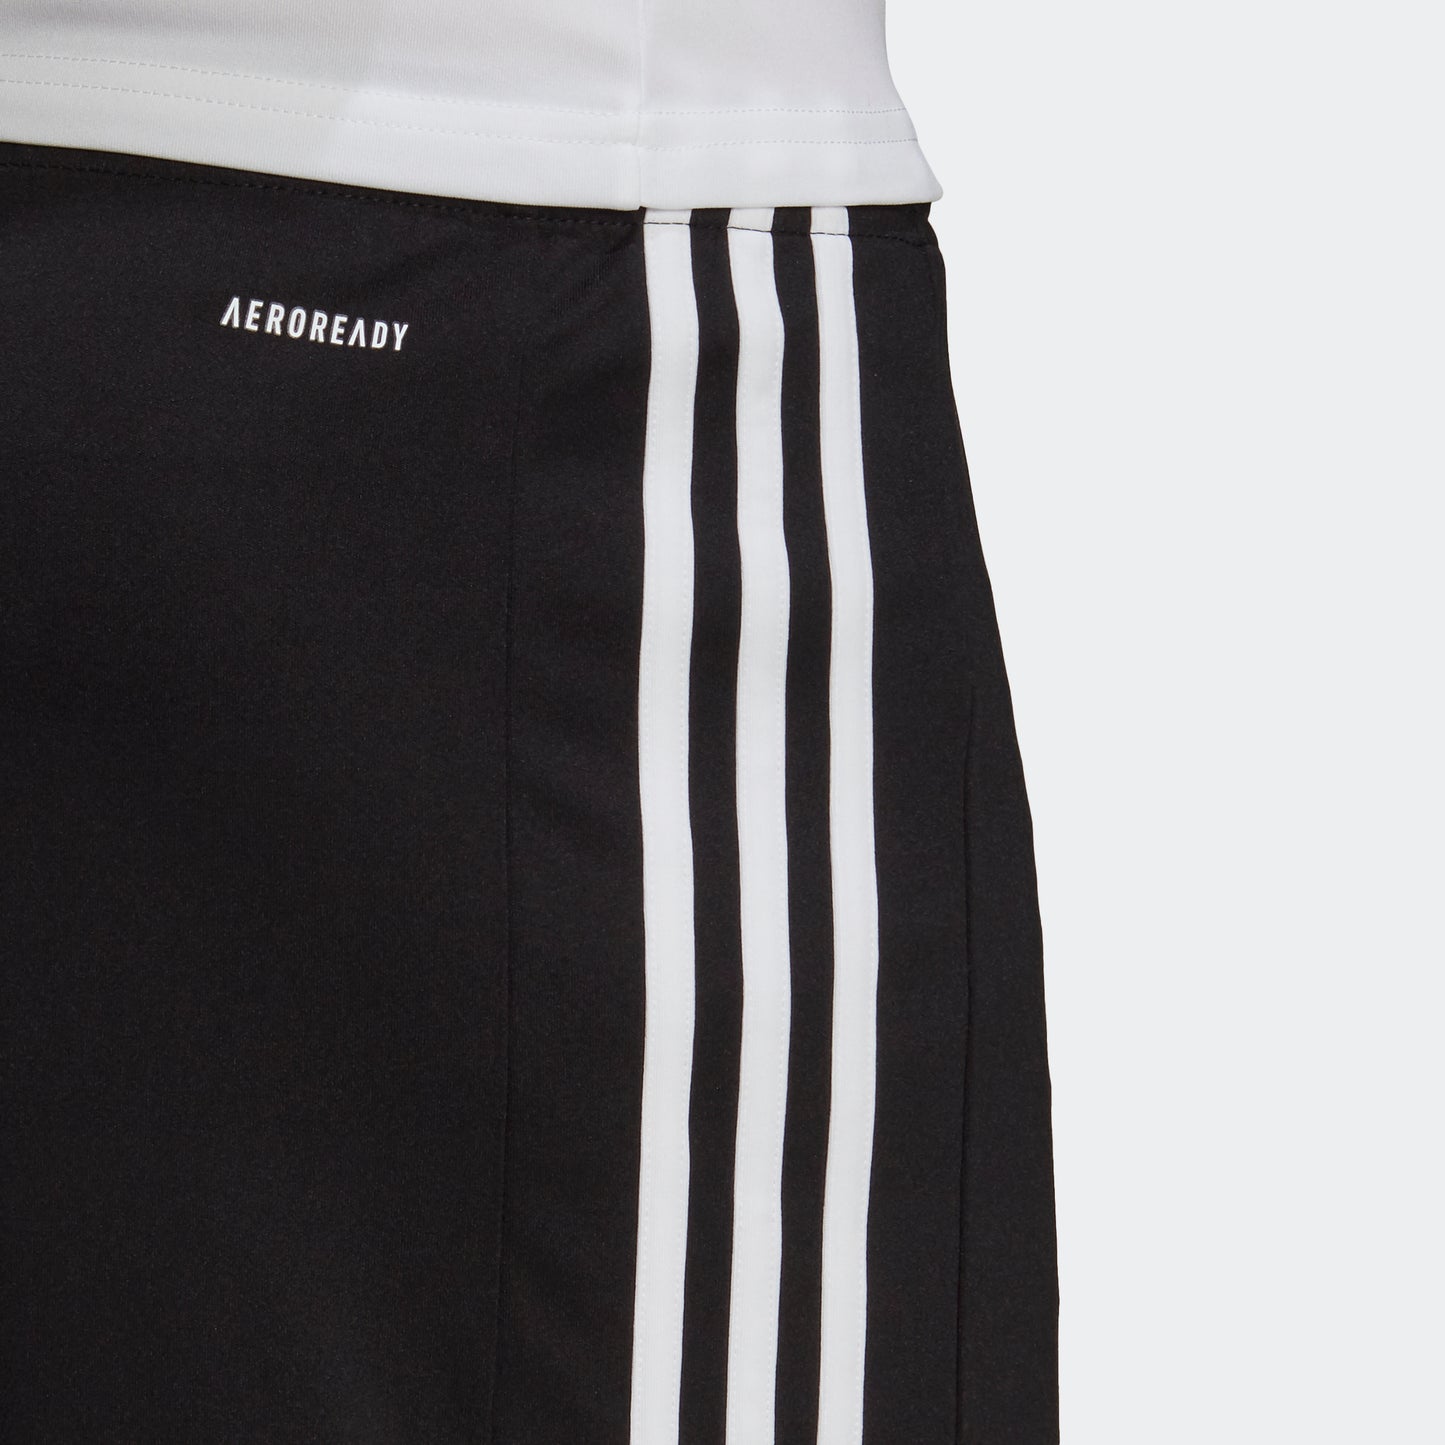 adidas SQUADRA 21 Shorts | Black | Men's